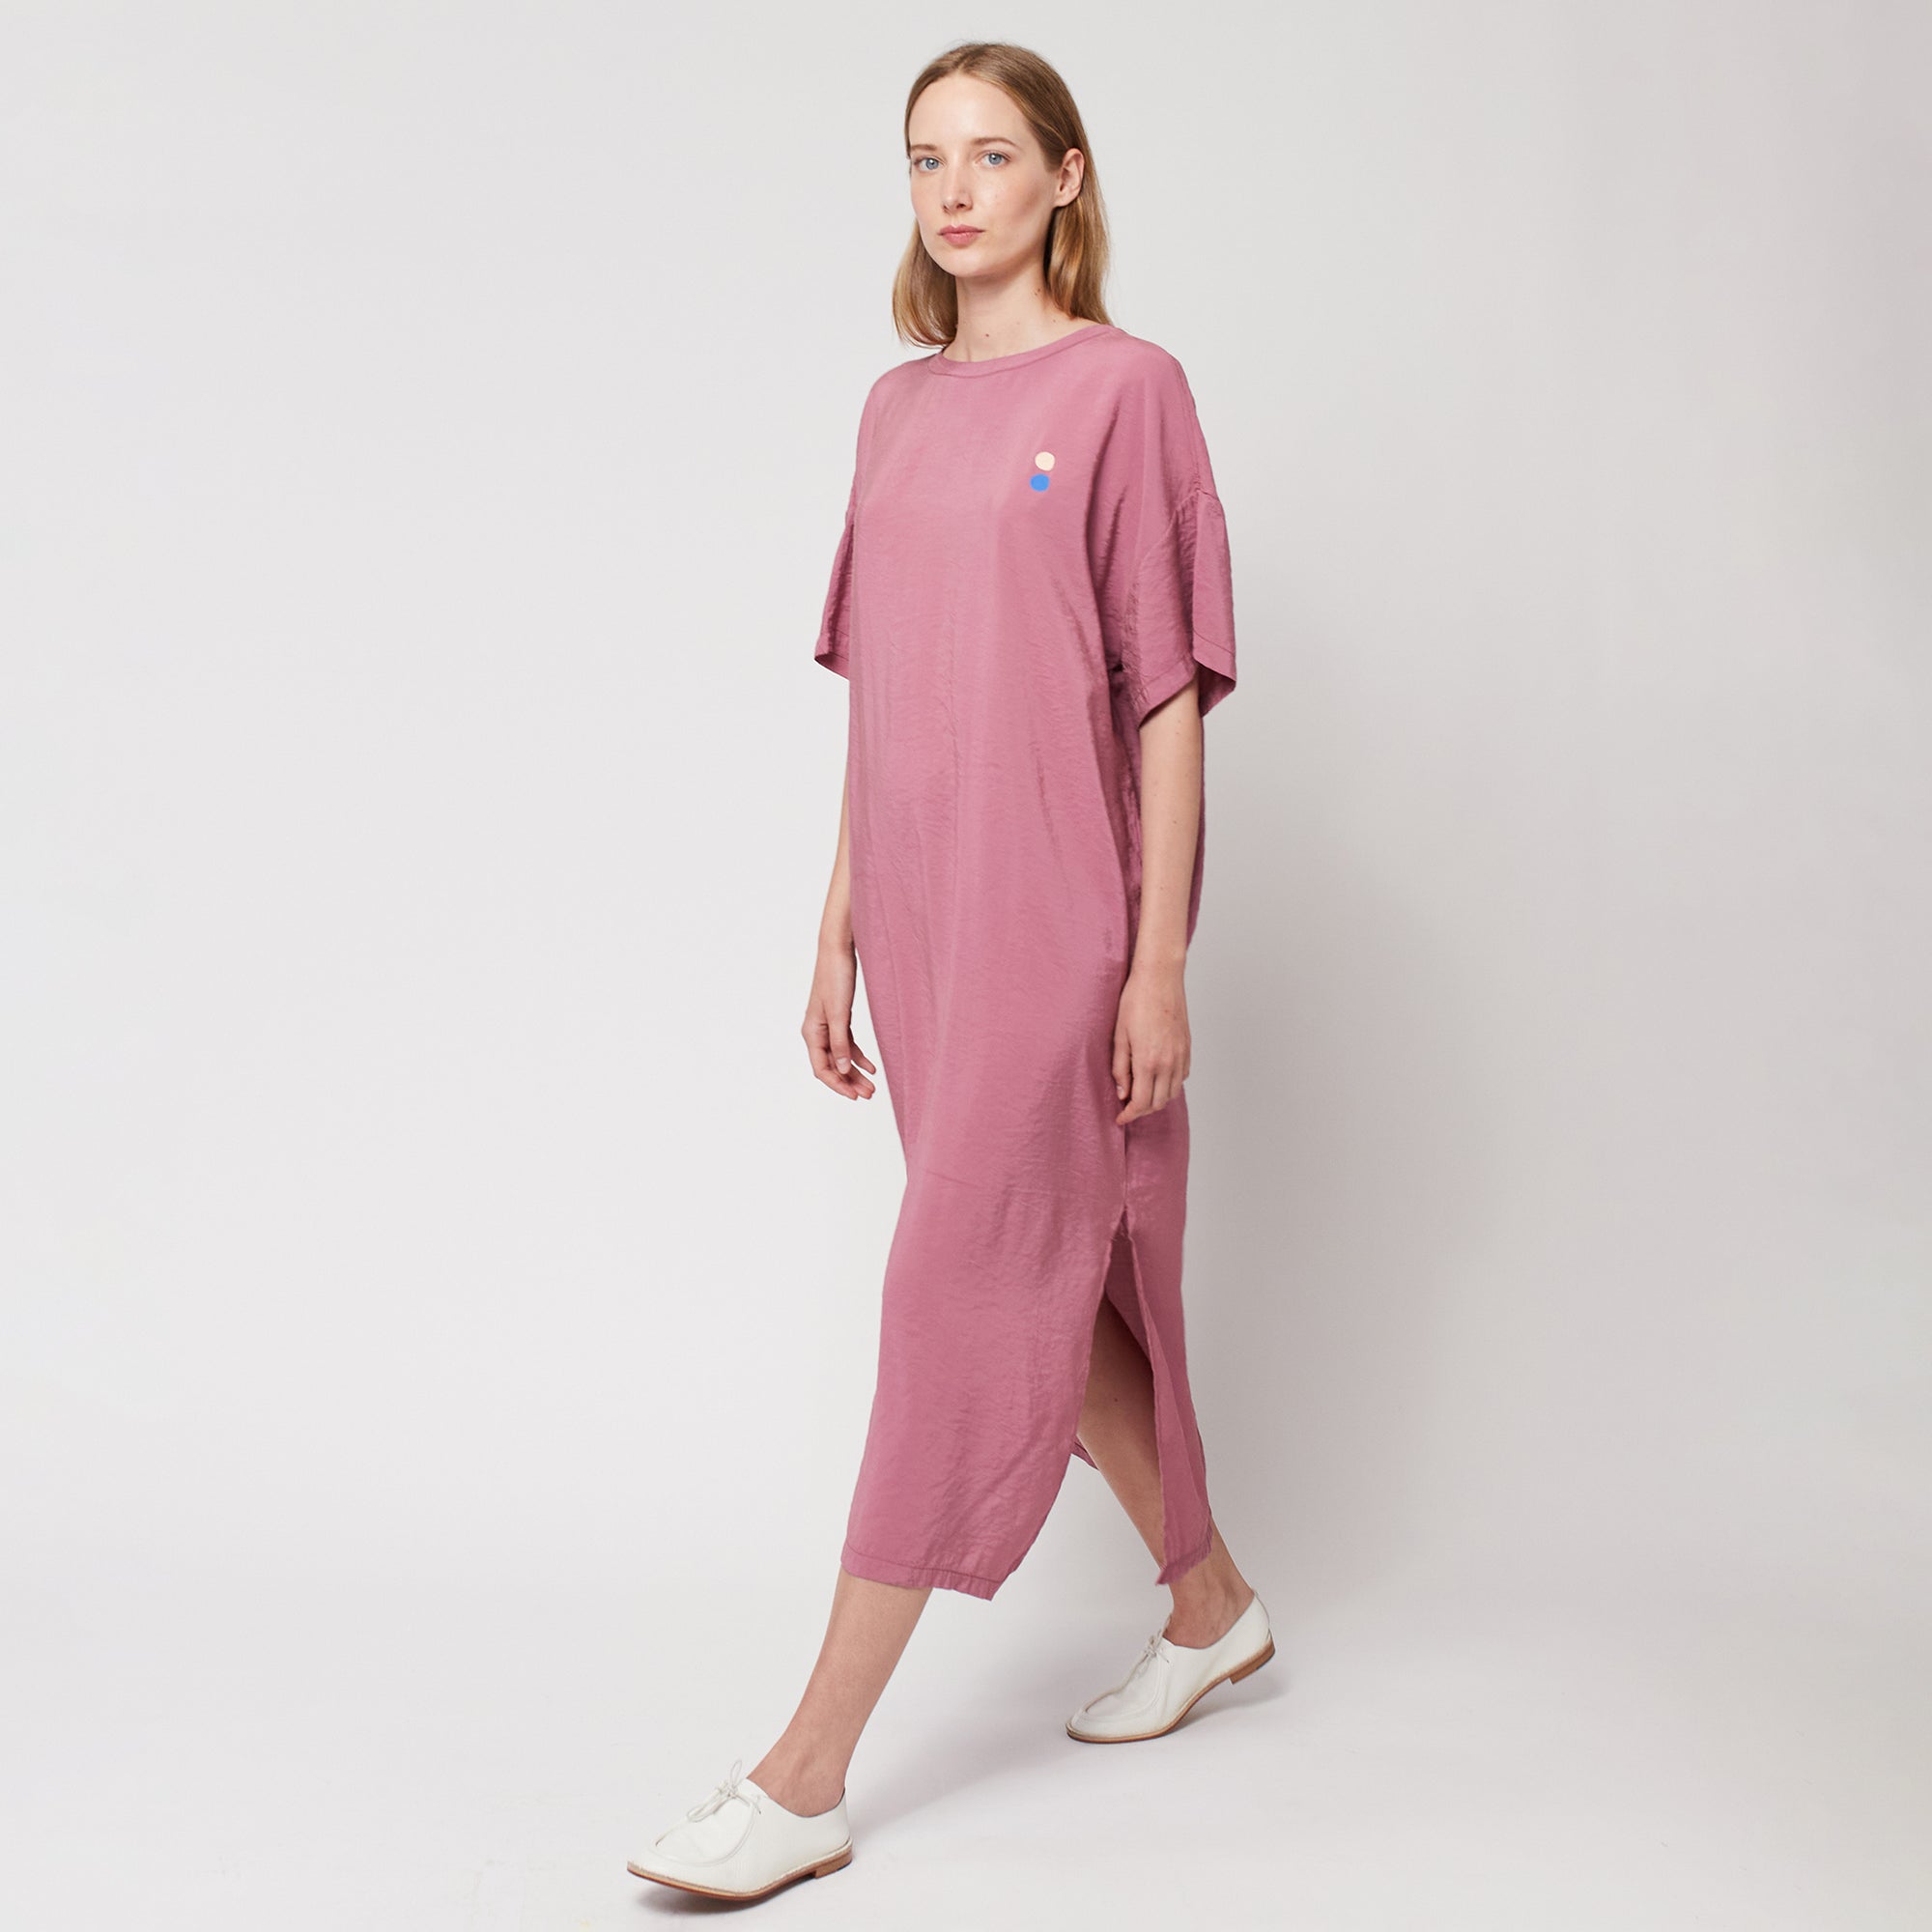 Bobo Choses Woman Long T-shirt Dress Coral Pink Mauve